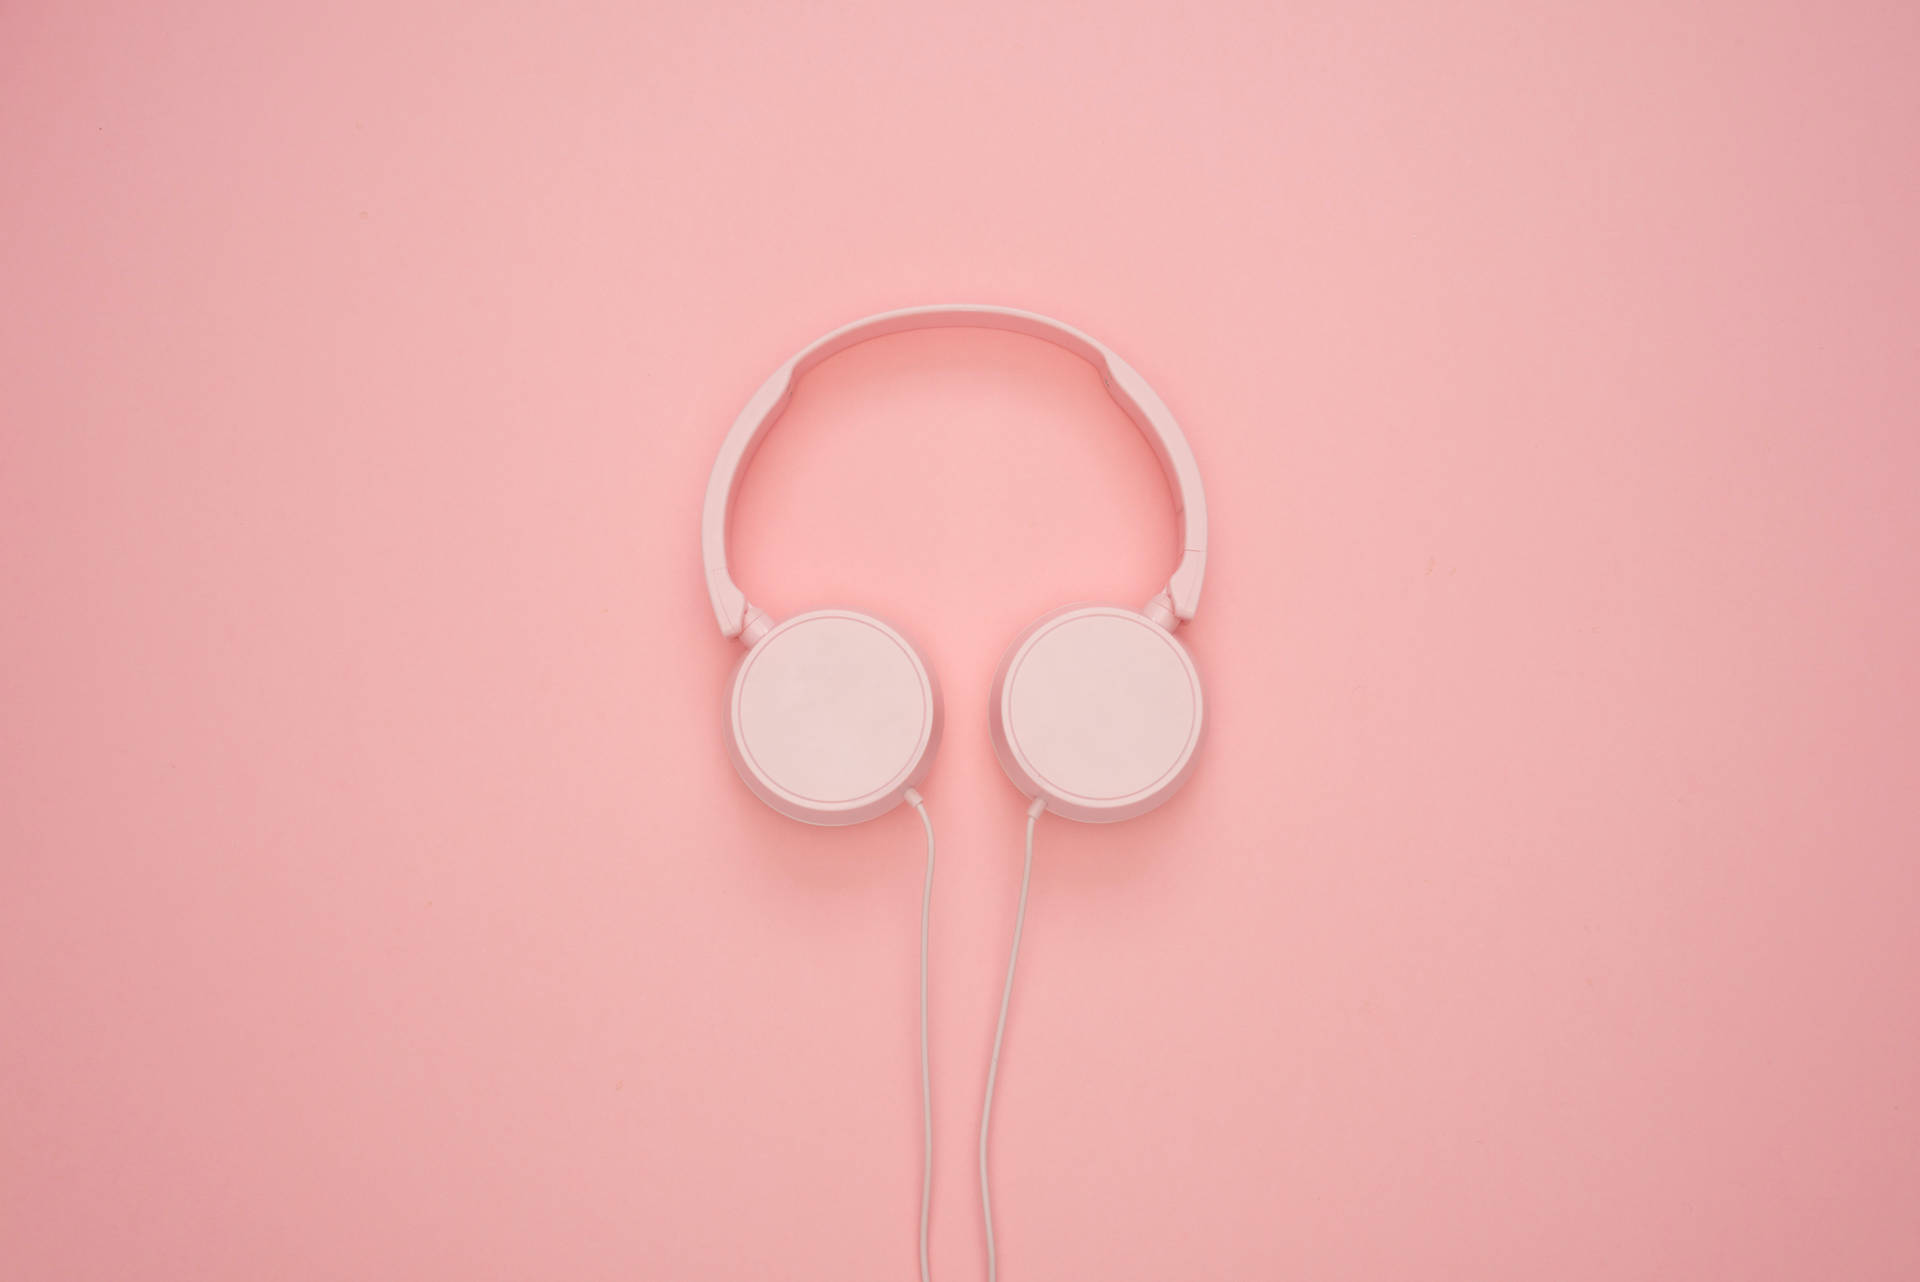 Pink Headphone In Plain Color Wallpaper